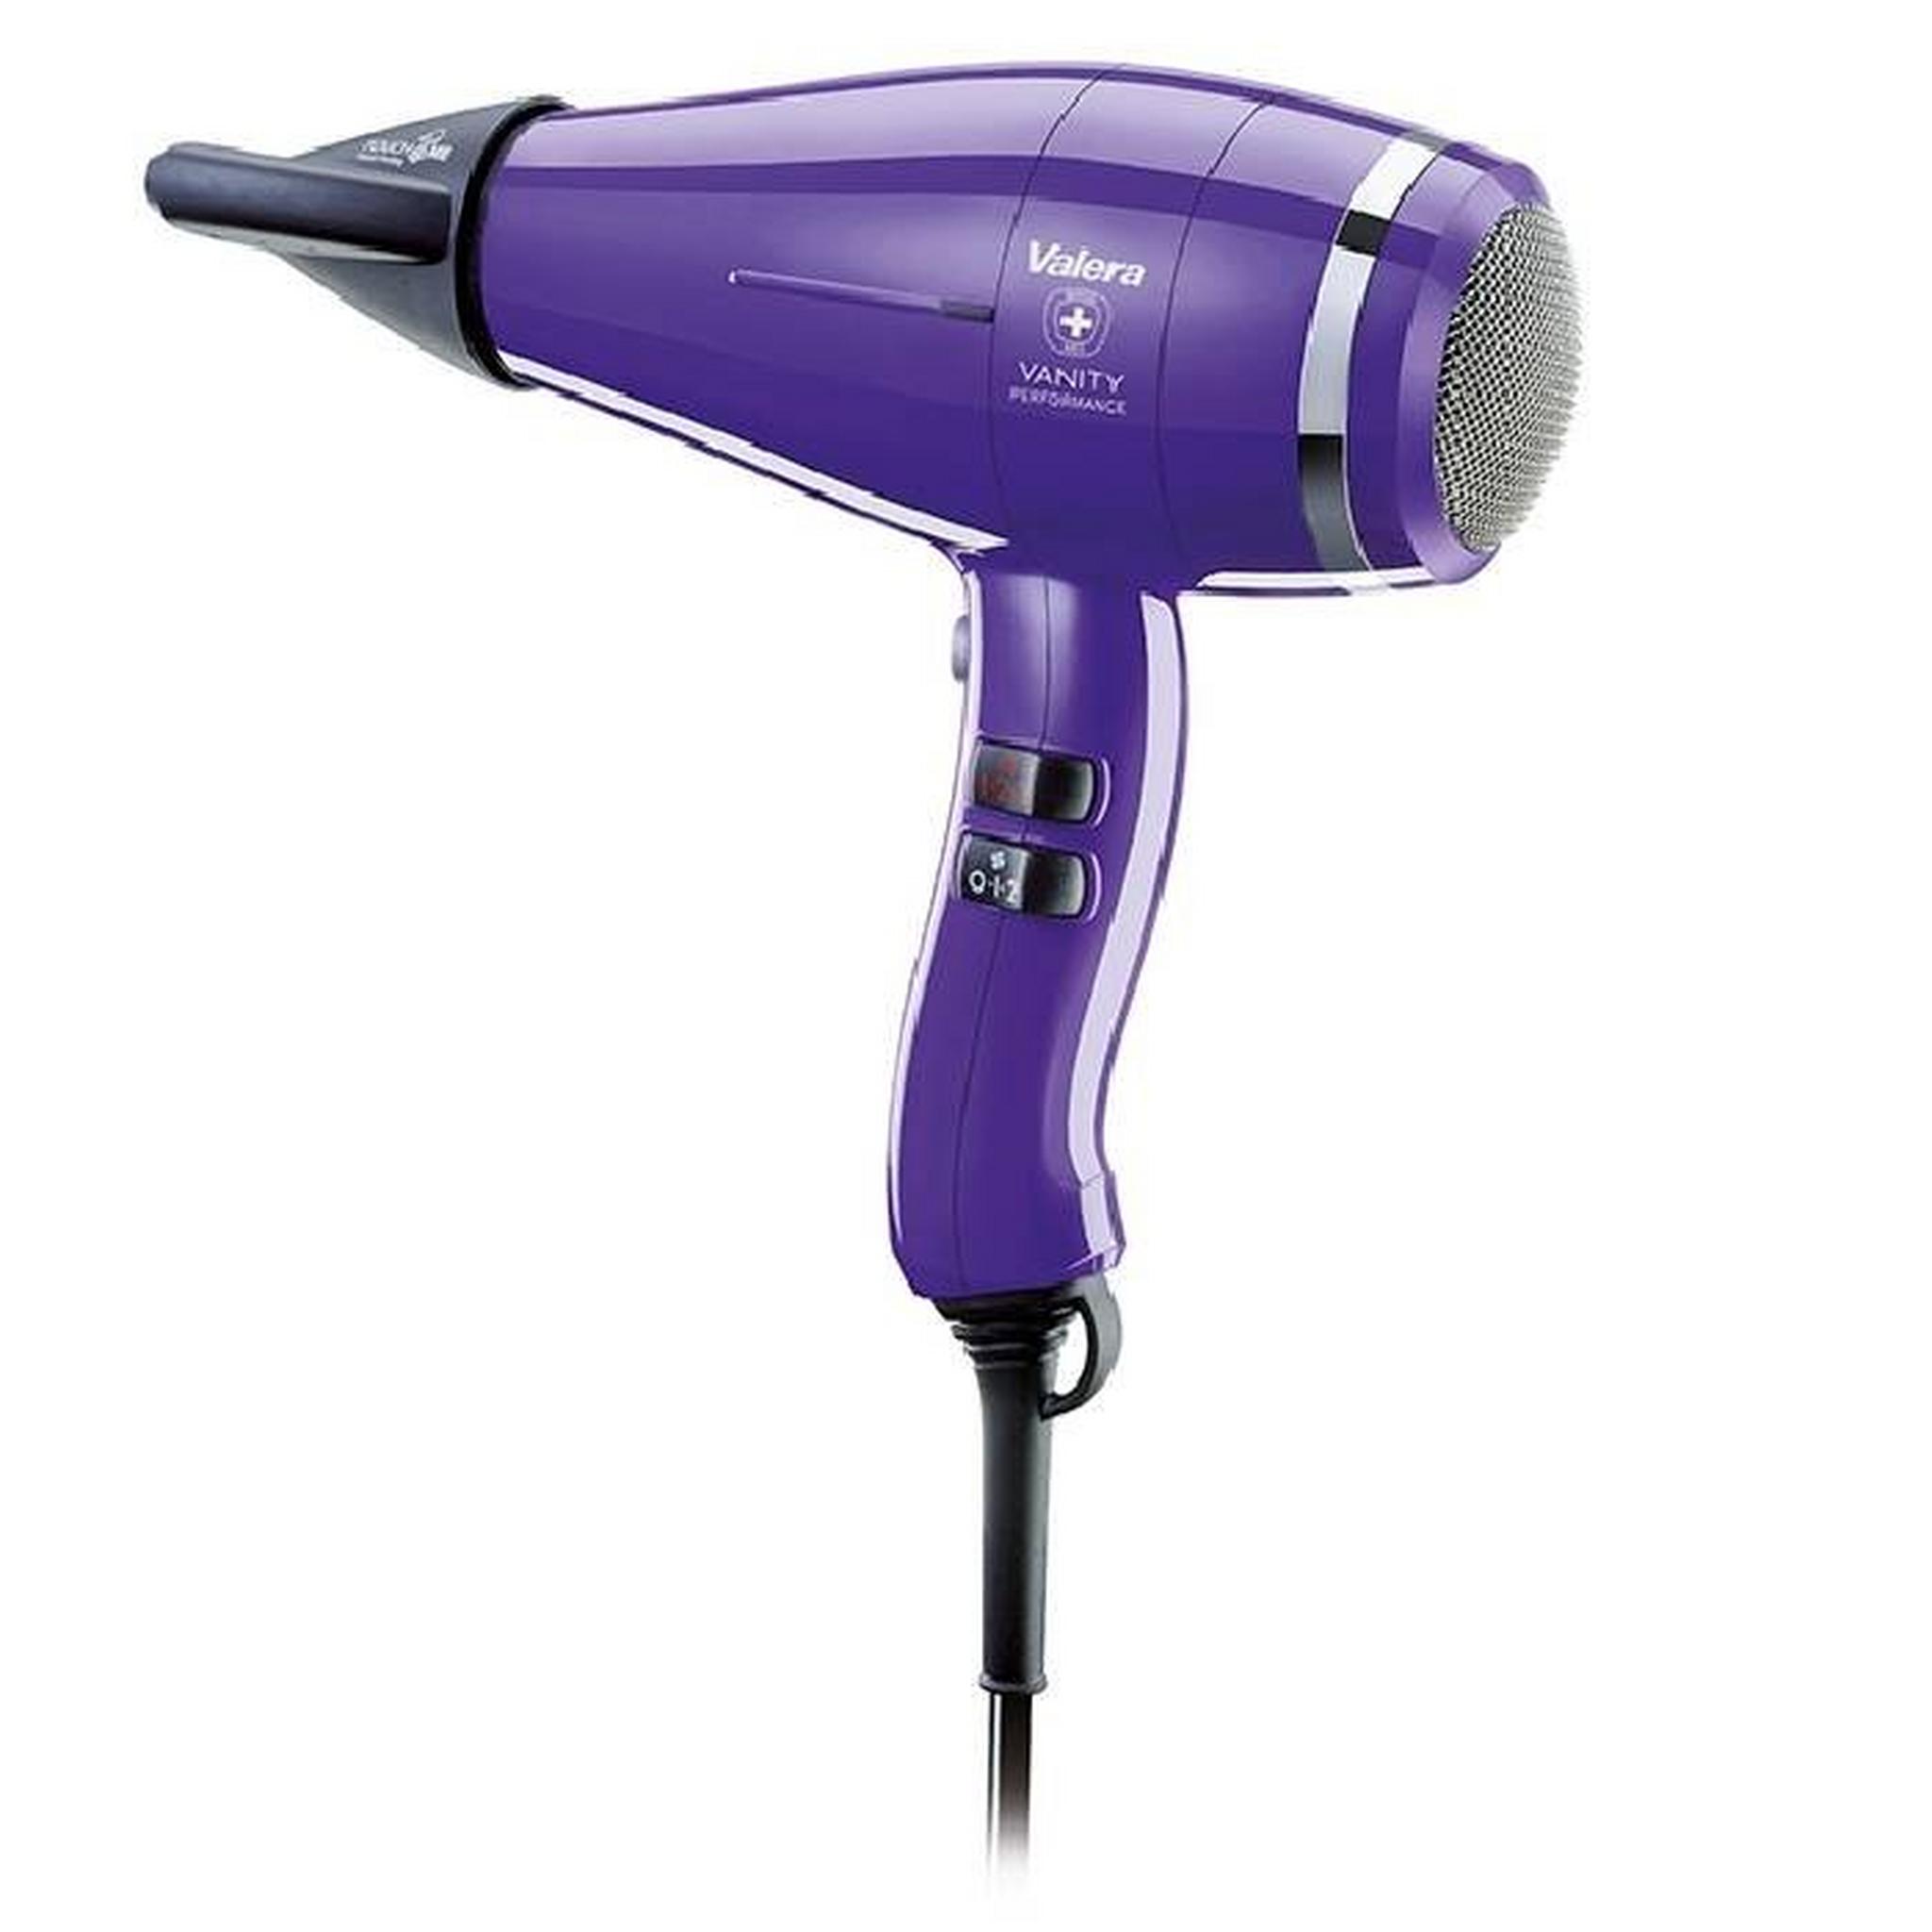 Valera professional Vanity Performance  8612 Hair Dryer, 2400 W, 6 Heat Settings, VA 8612 RC PP - Purple